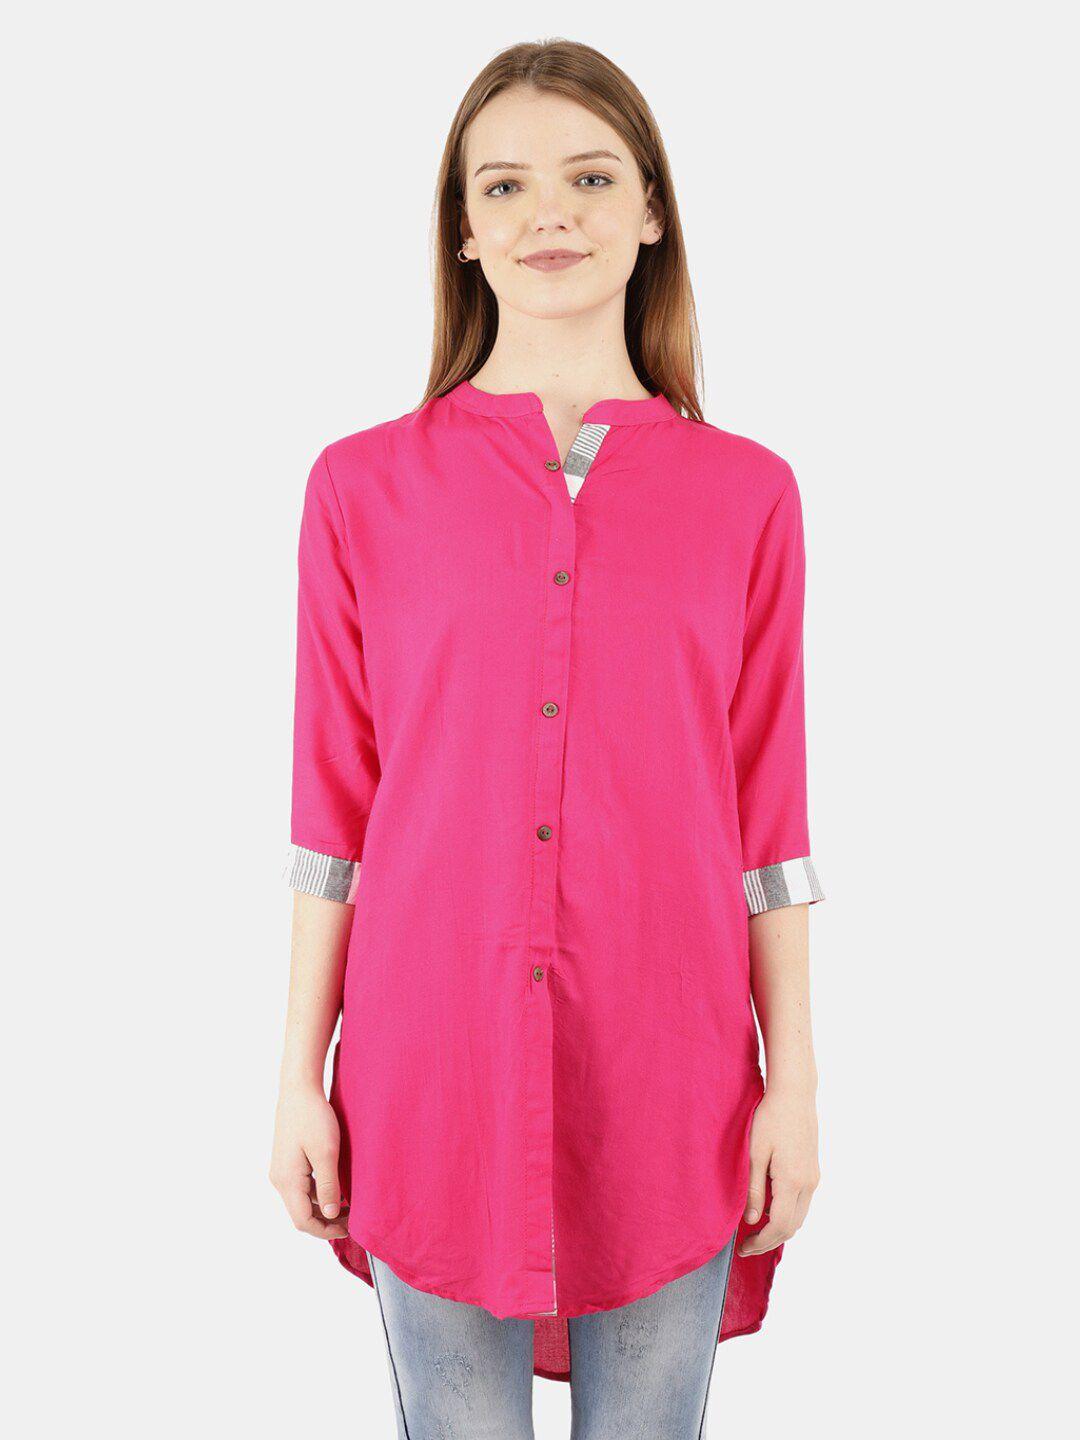 v-mart women fuchsia mandarin collar shirt style top with high-low hemline